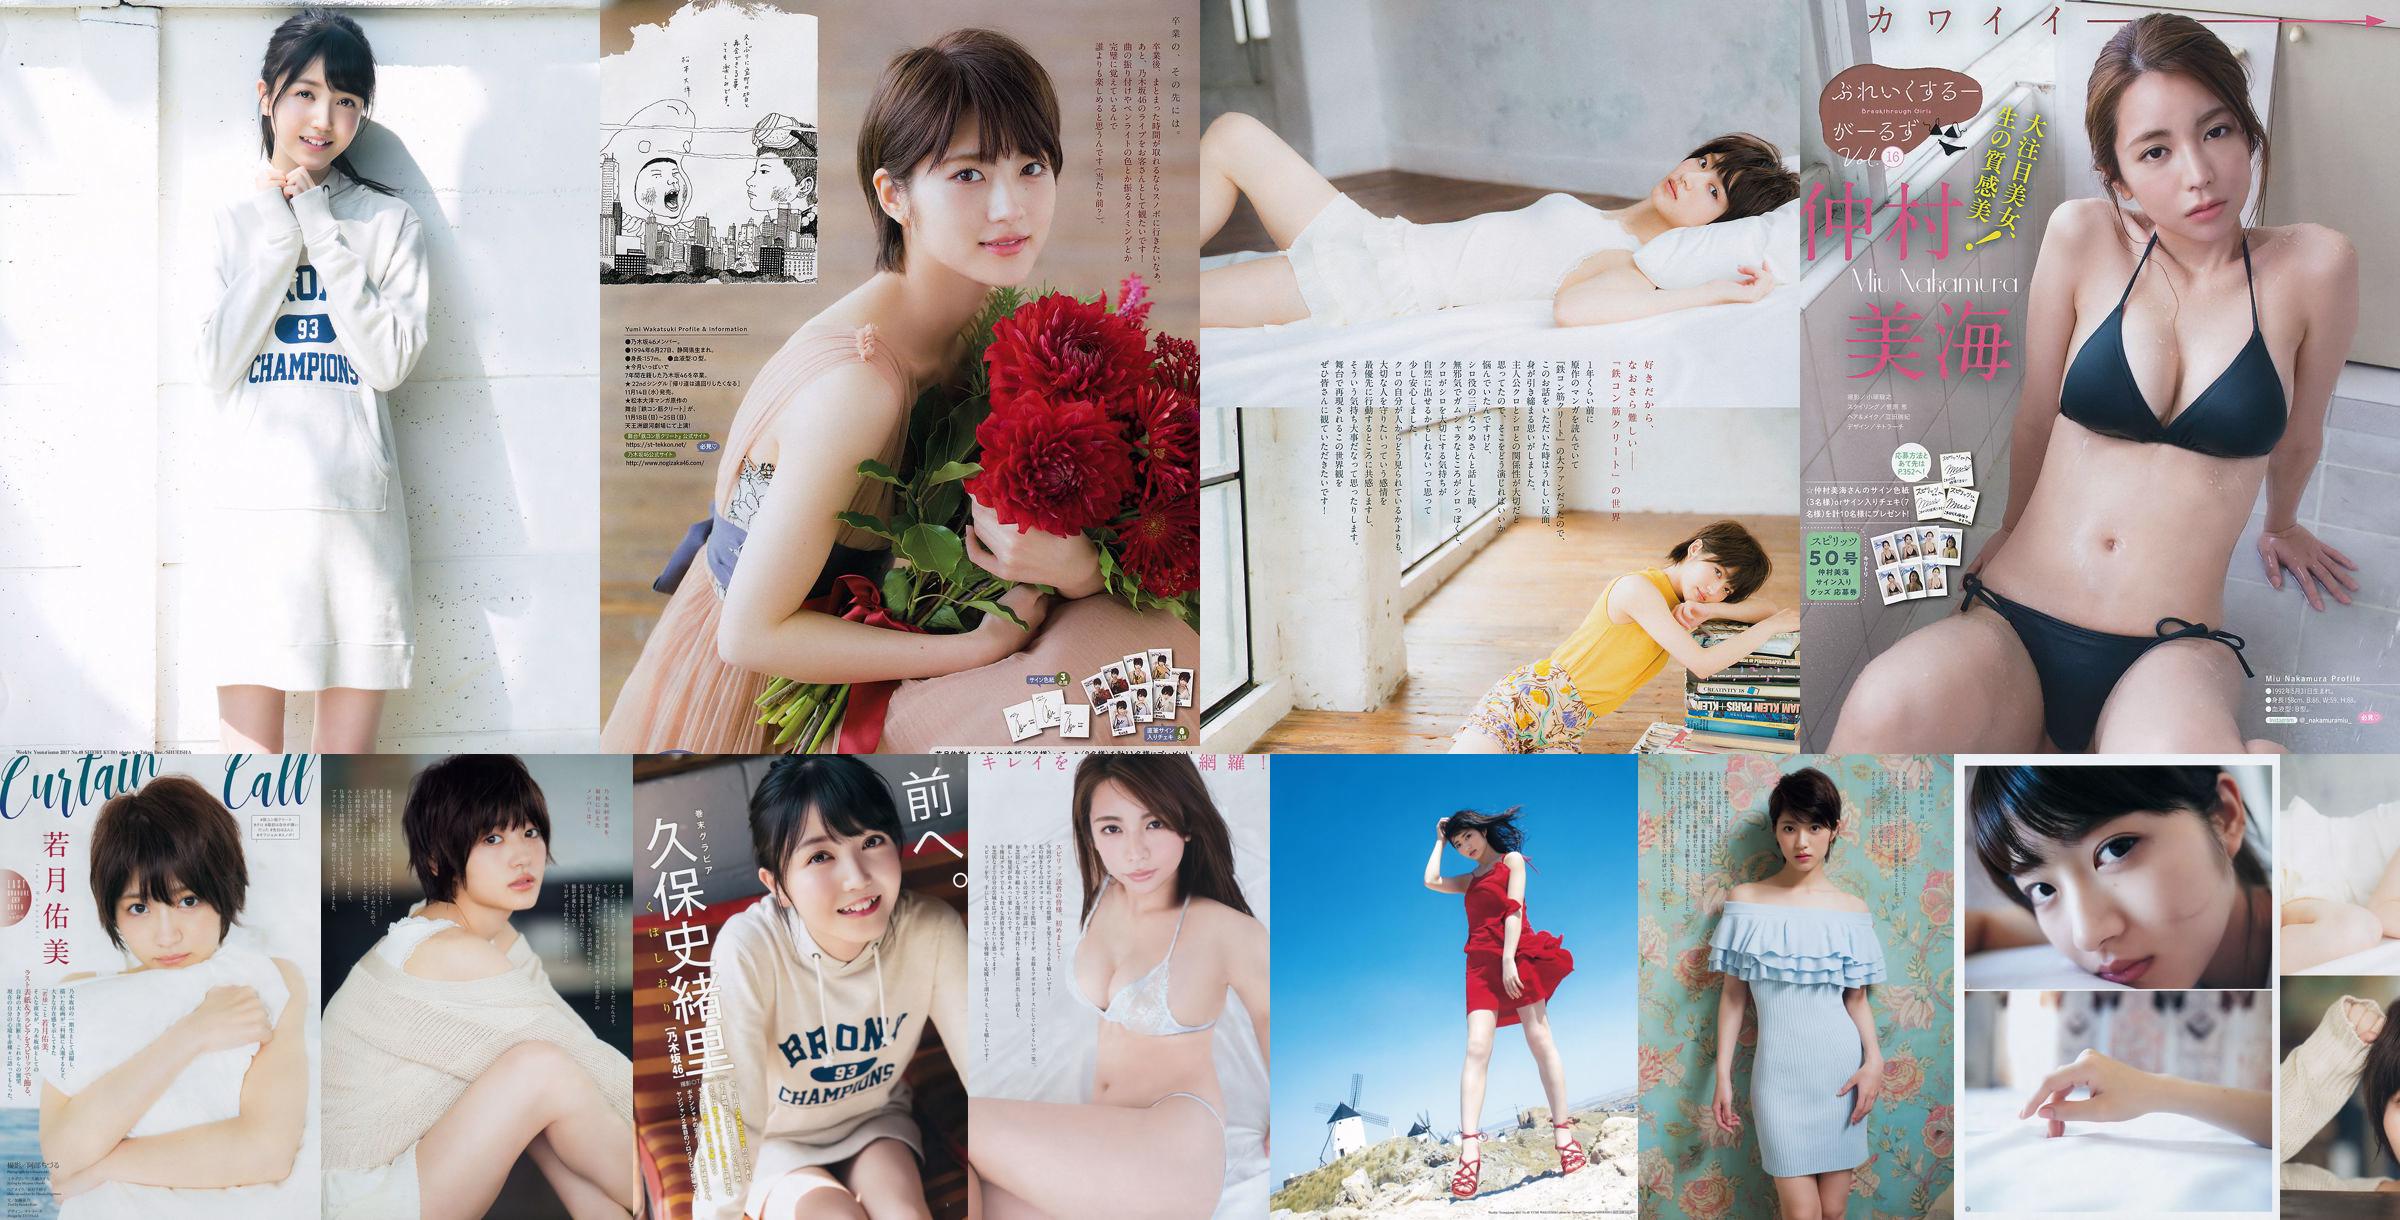 [Grands esprits de la bande dessinée hebdomadaire] Wakazuki Yumi Nakamura Mihai 2018 Magazine photo n ° 50 No.4b2807 Page 1